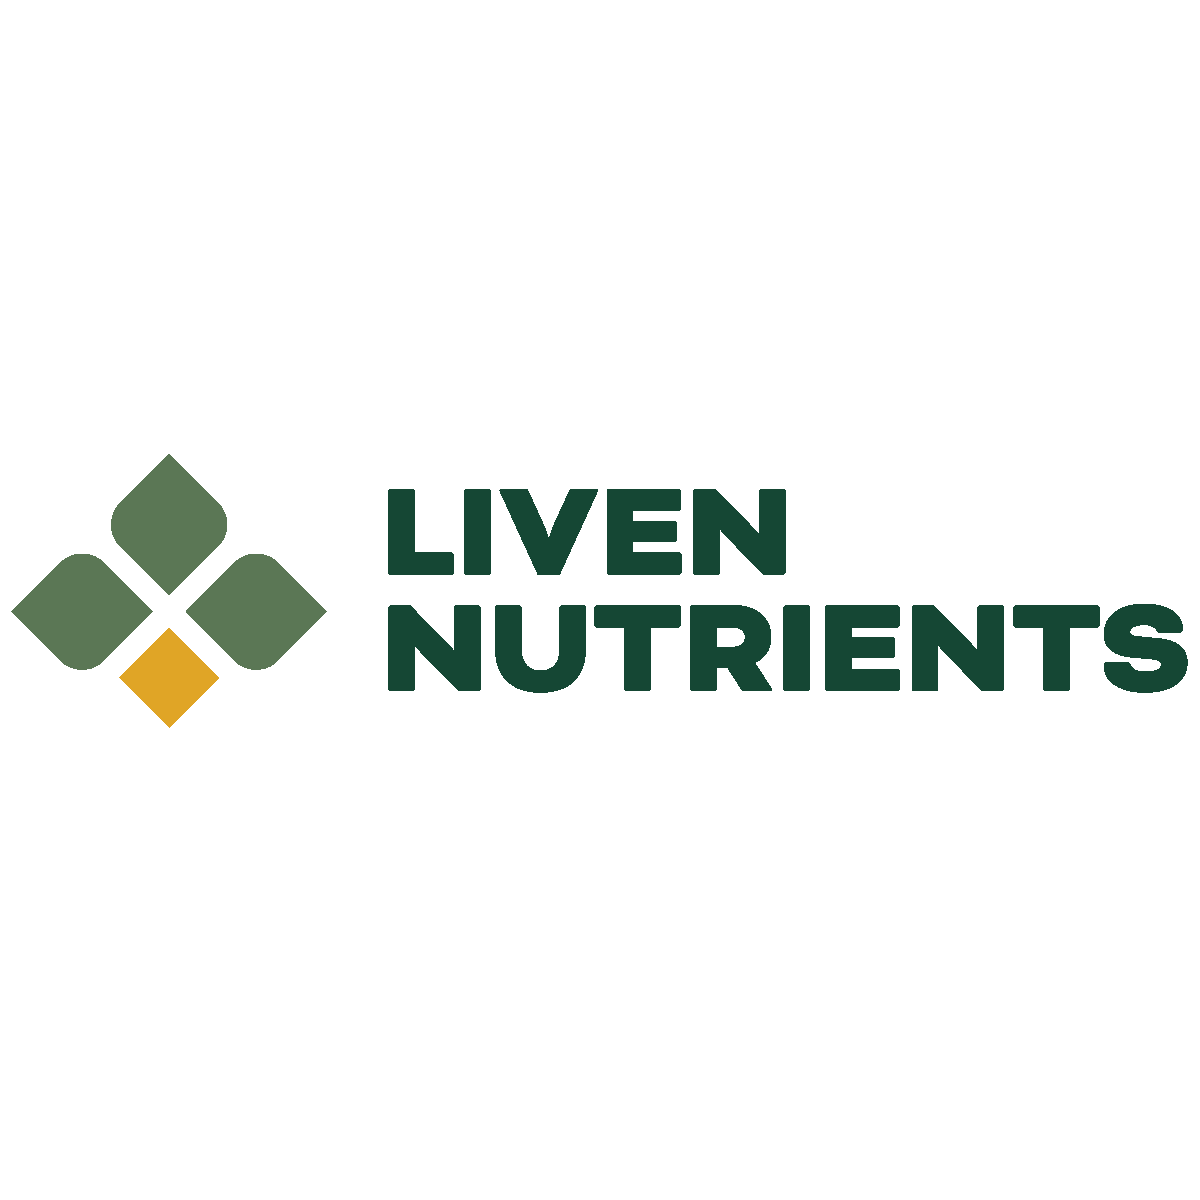 Liven Nutrients Pte. Ltd. company logo